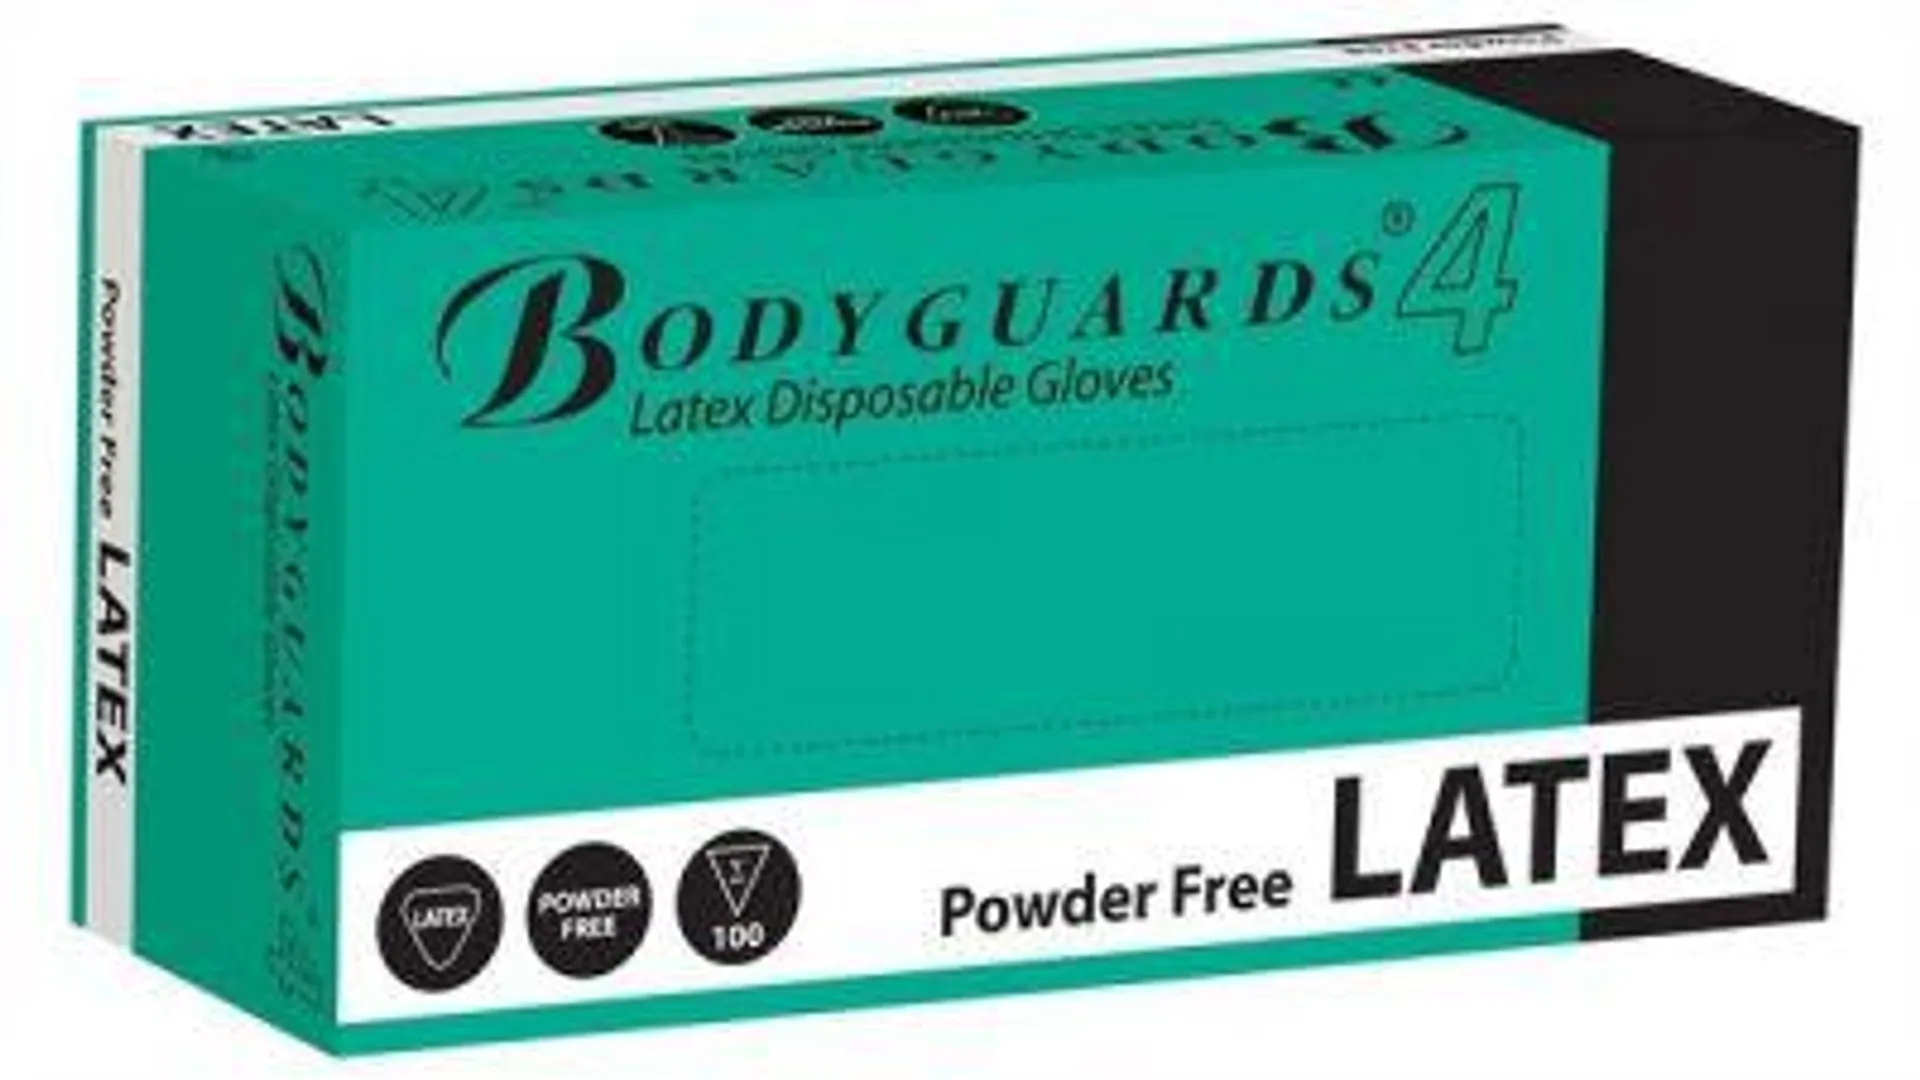 saville latex powder free gloves xl - x 100